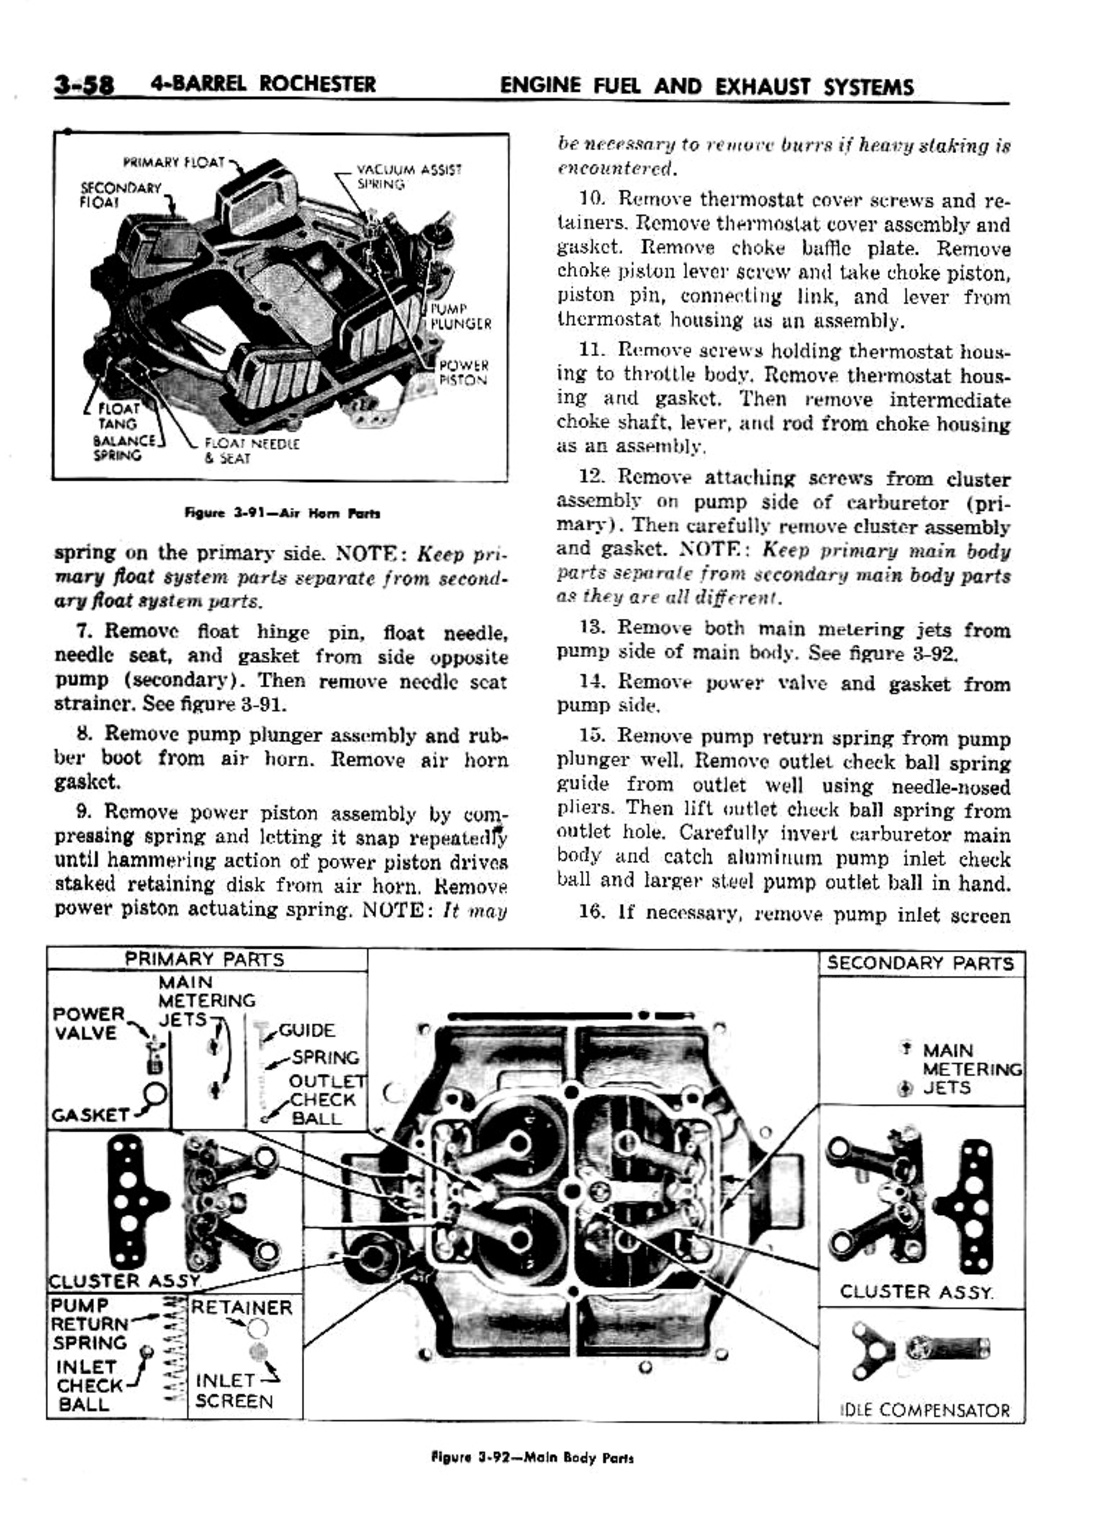 n_04 1959 Buick Shop Manual - Engine Fuel & Exhaust-058-058.jpg